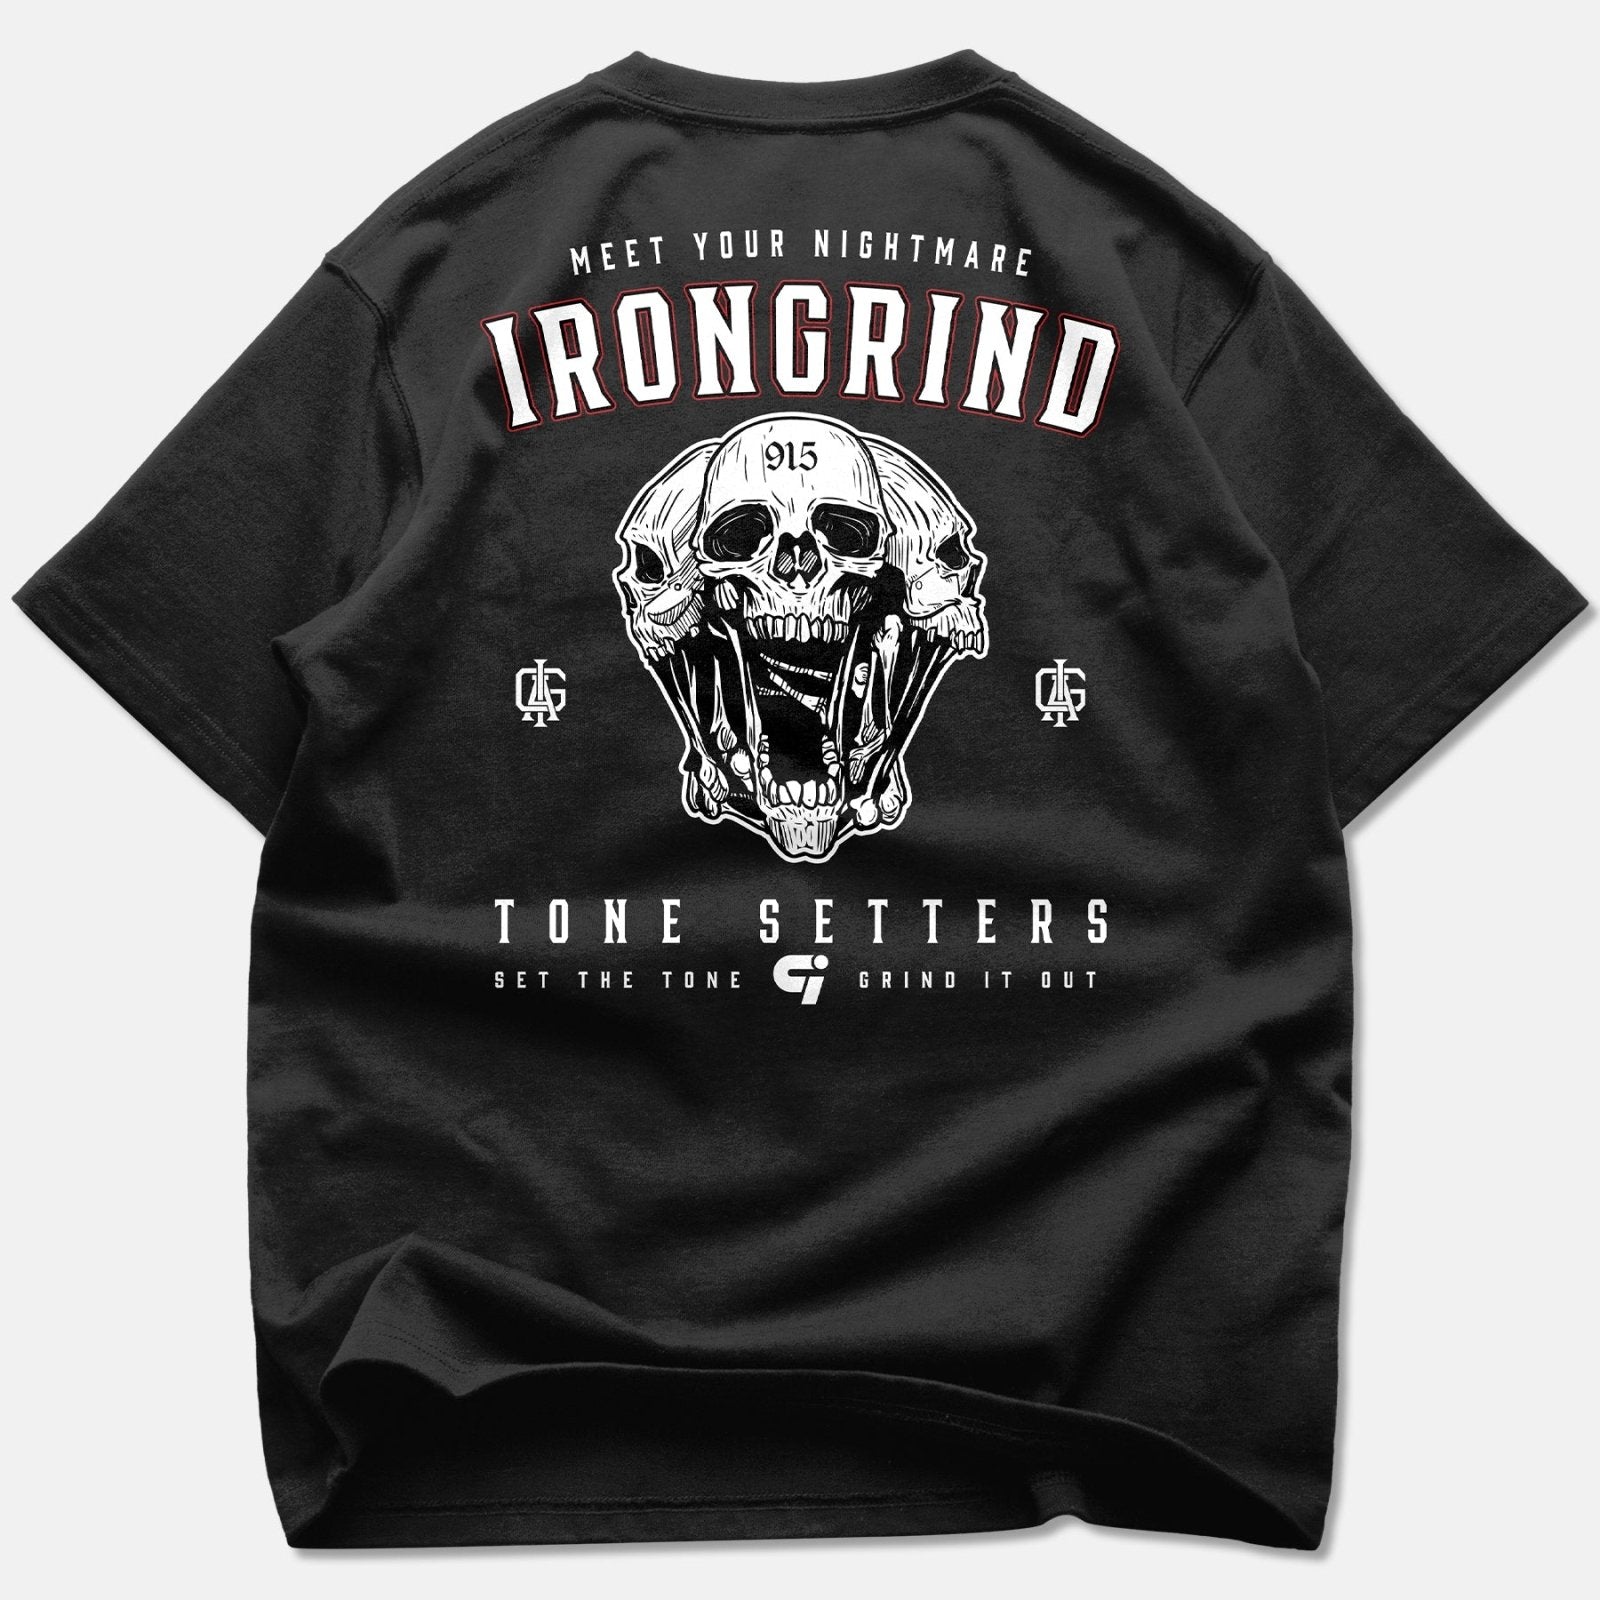 [Limited Edition] HalloStream 'Nightmare' Heavyweight T-Shirt - IronGrind Athletics - activewear - gymshark - alphalete